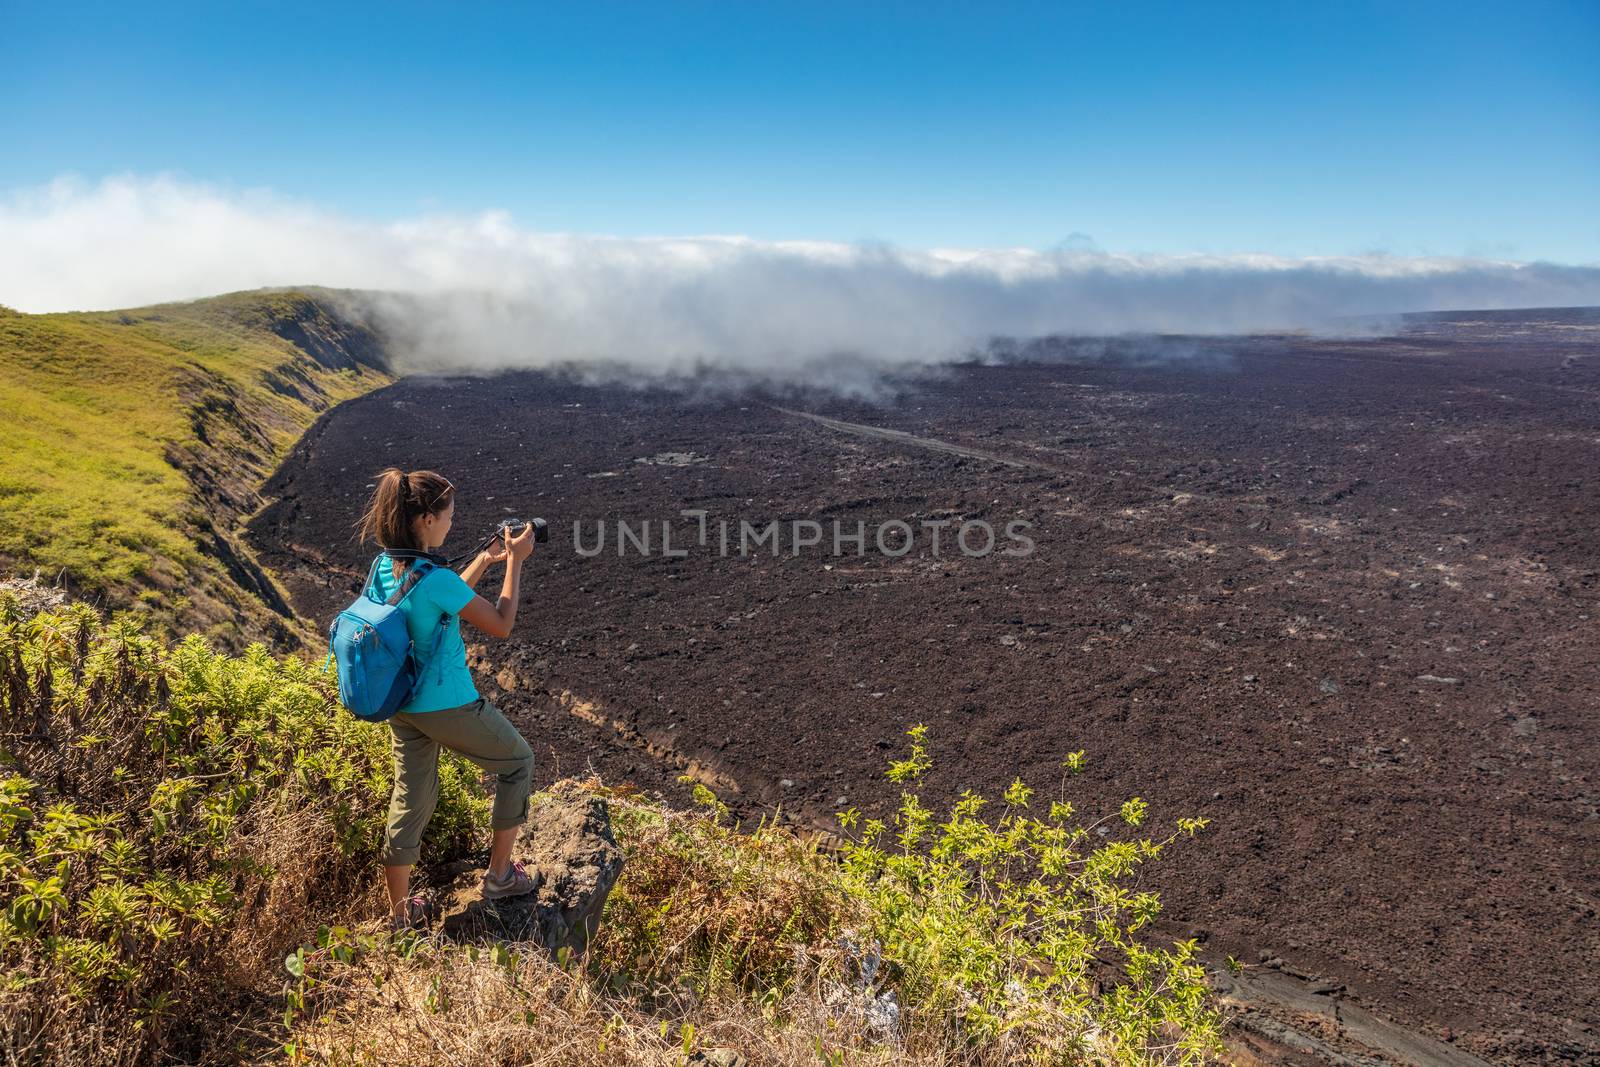 Galapagos tourist hiking on volcano Sierra Negra on Isabela Island taking photos with camera. Woman on hike on famous landmark, worlds 2nd largest active volcanic caldera, Galapagos Islands Ecuador.